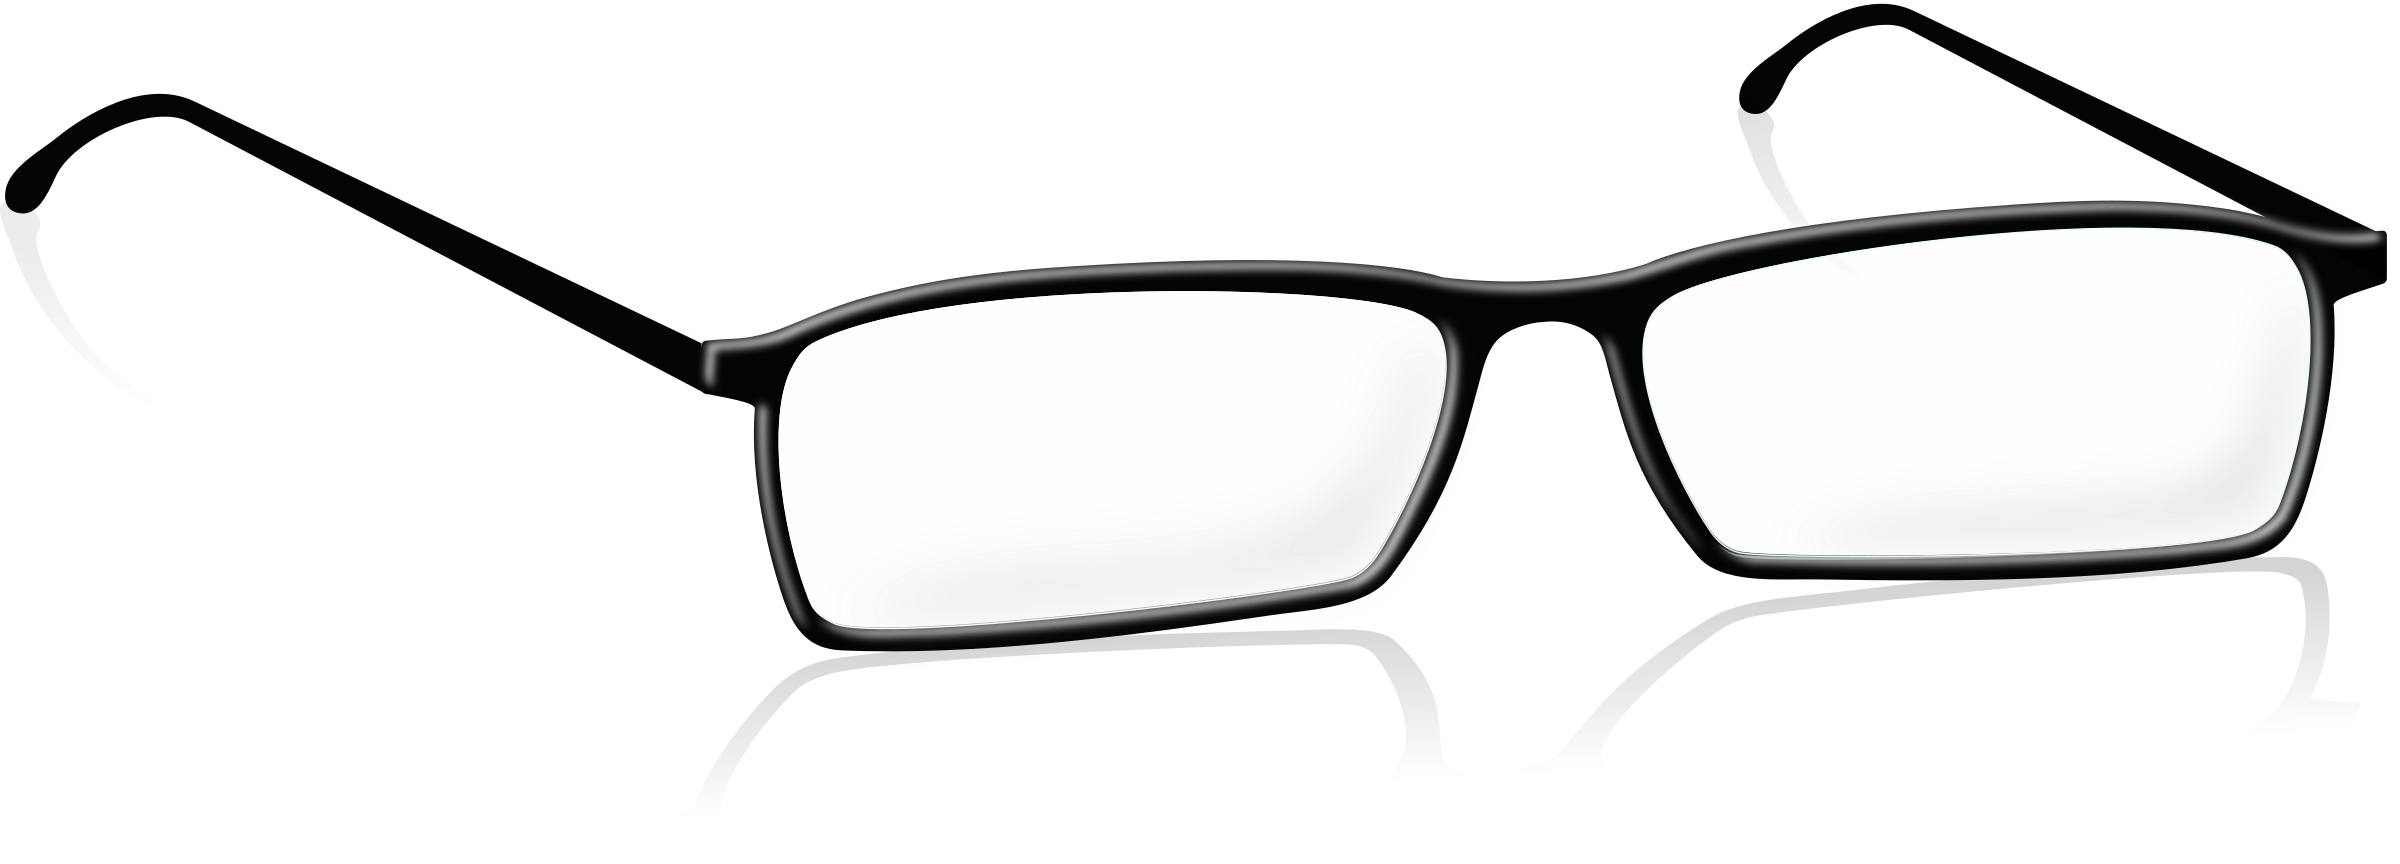 . Clipart glasses glass frame